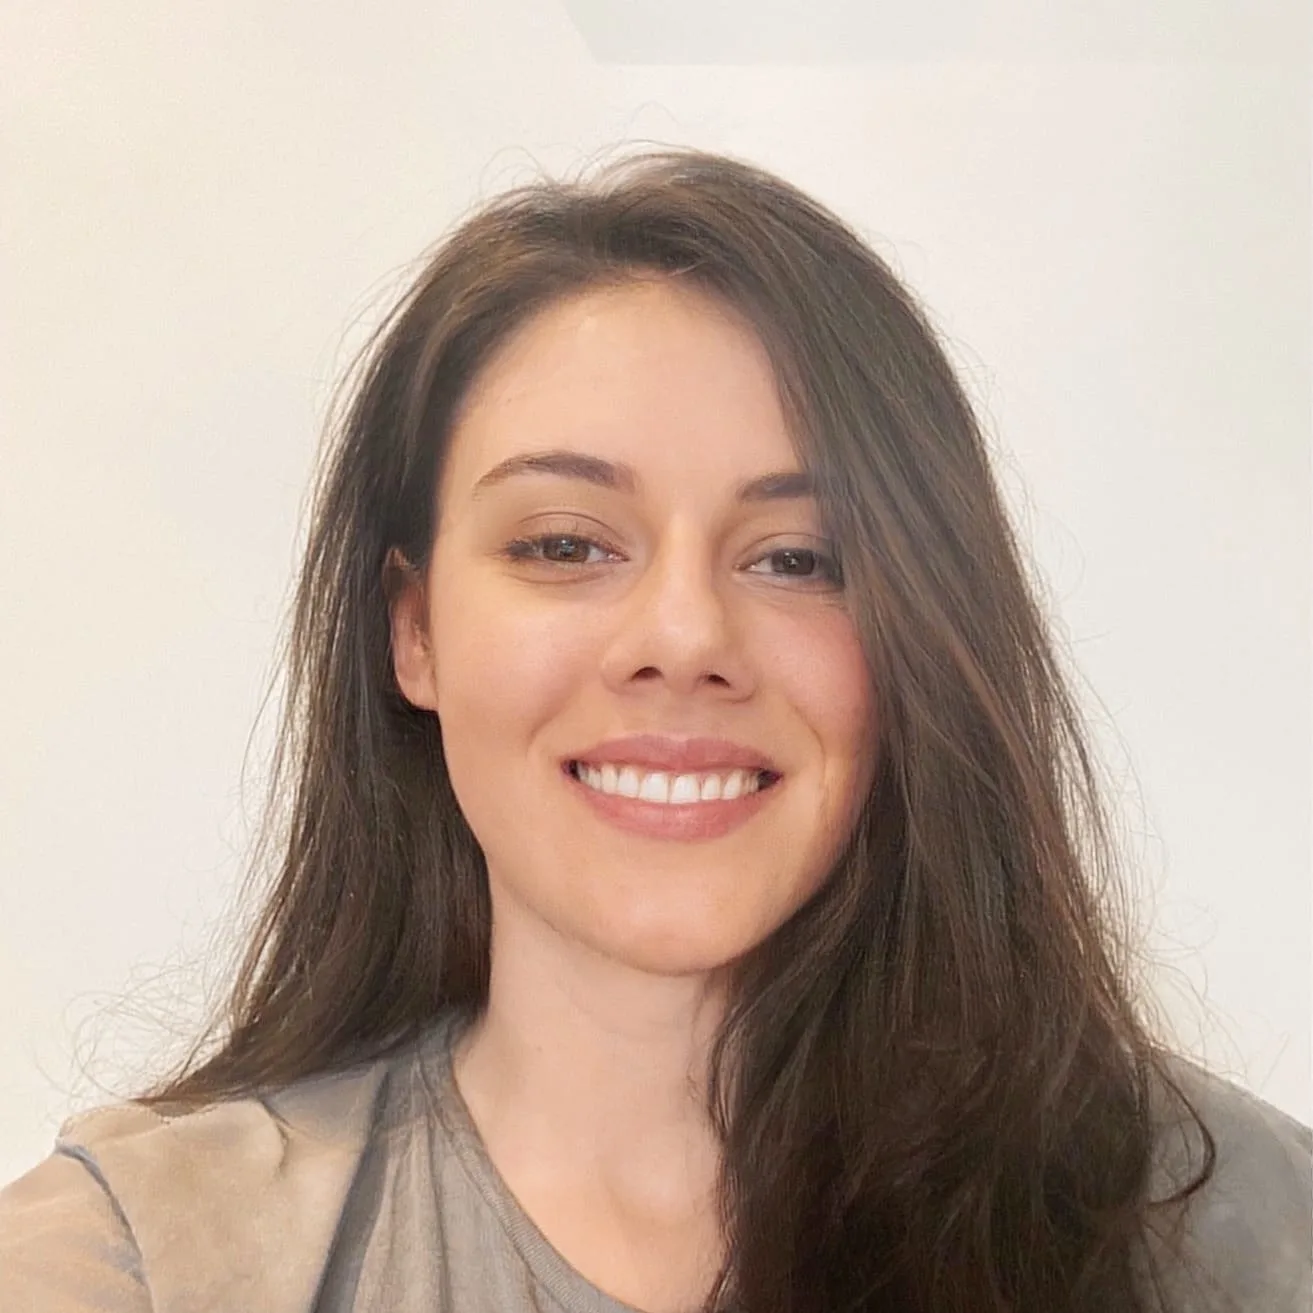 Rafaela Mascaro's avatar